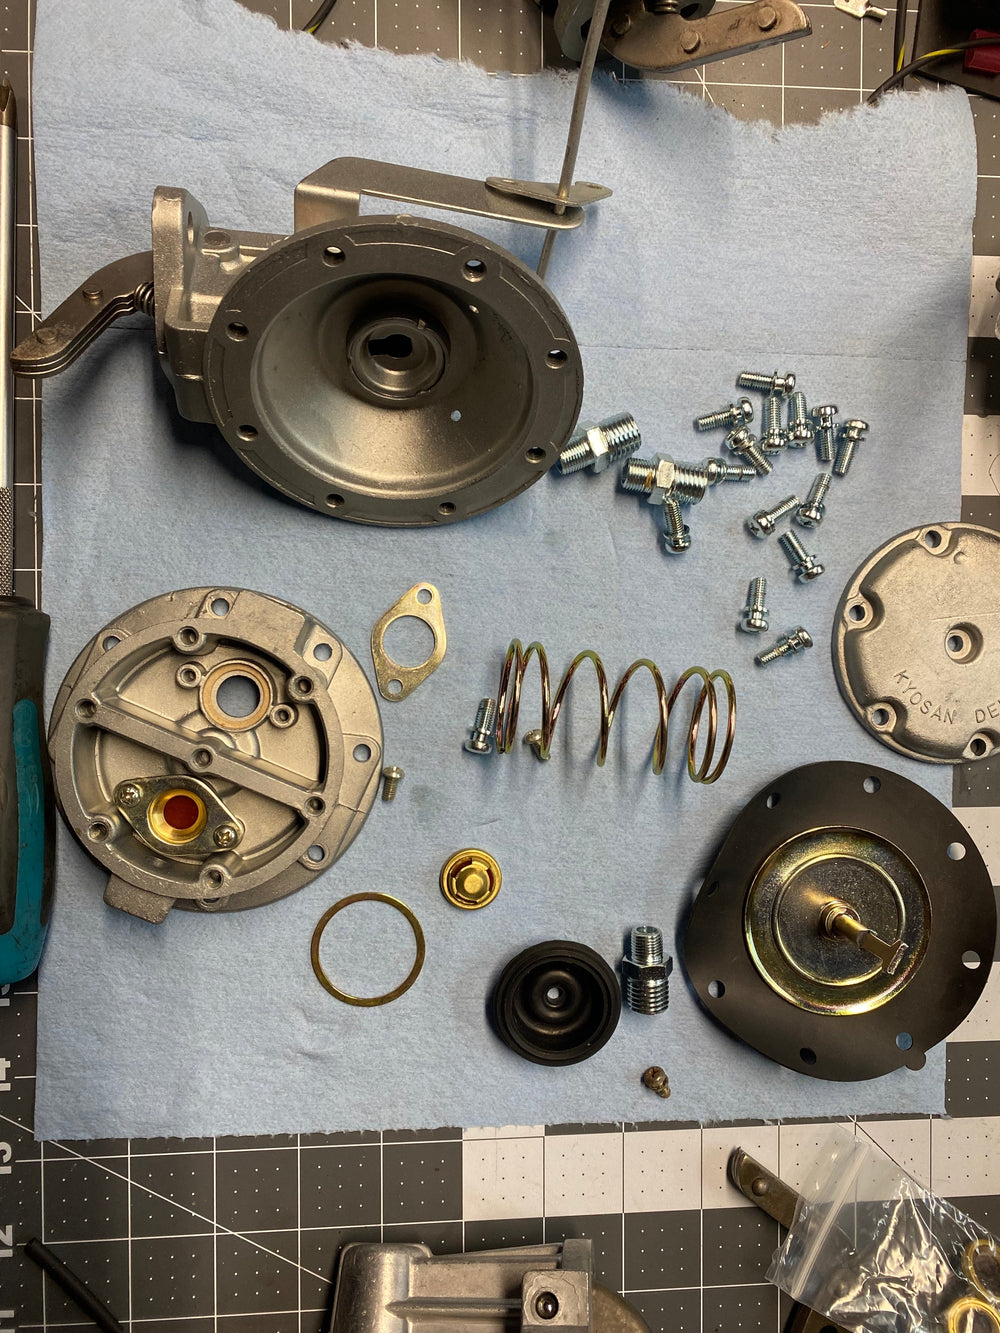 FJ40 FJ45 FJ55 fuel pump rebuild kit OEM Kyosan Toyota Land Cruiser repair